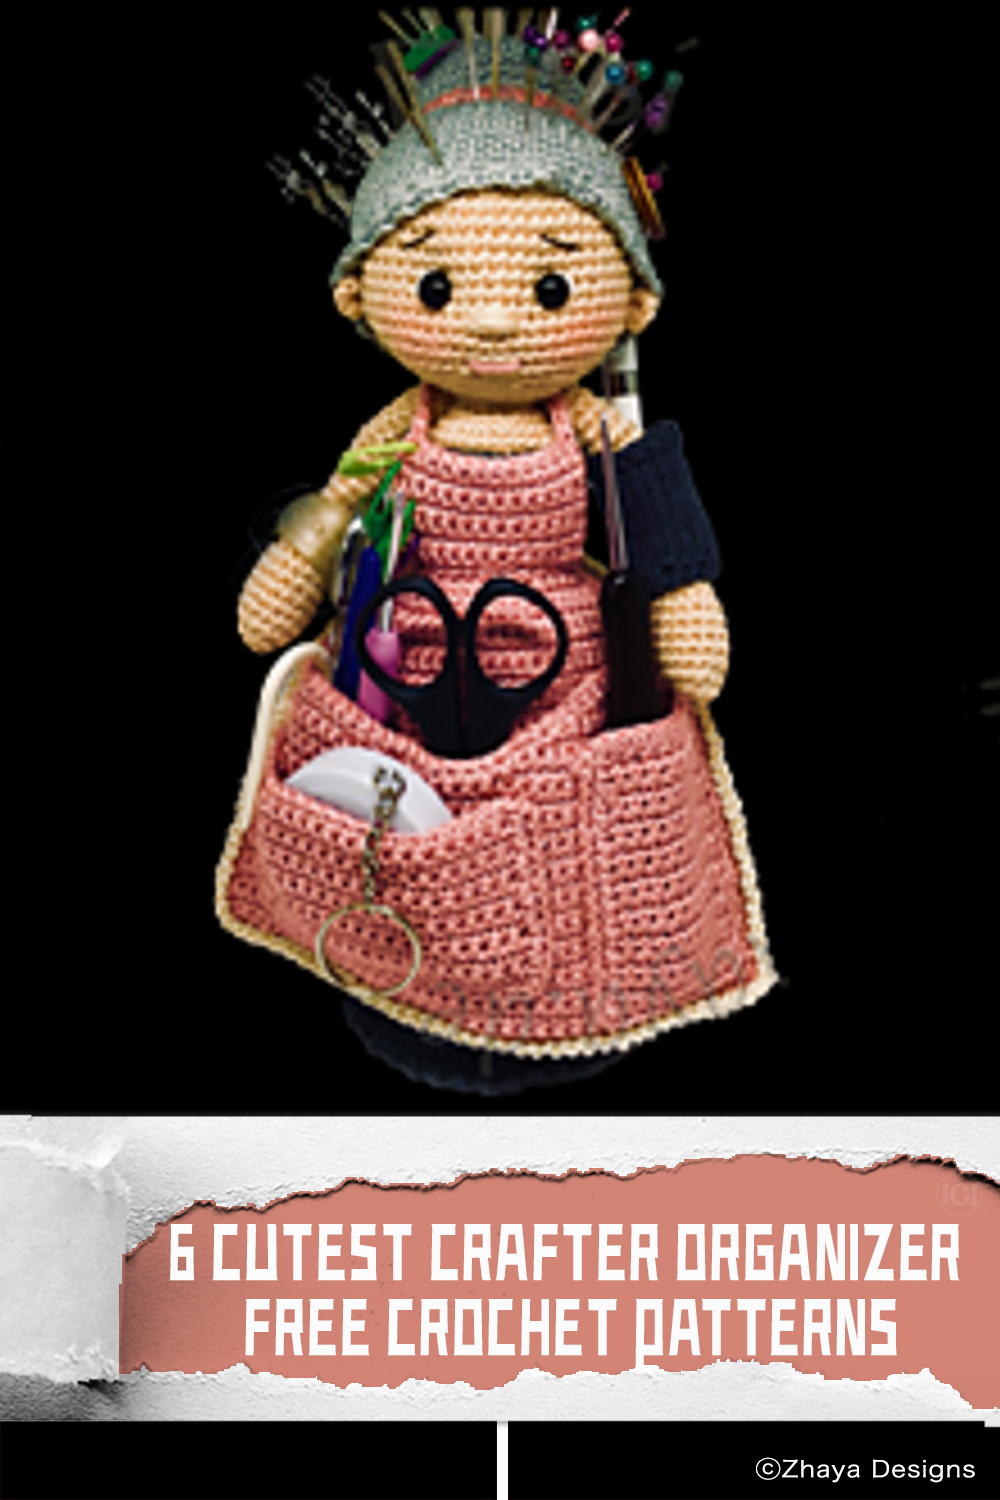 6 Cutest Crafter Organizer FREE Crochet Patterns